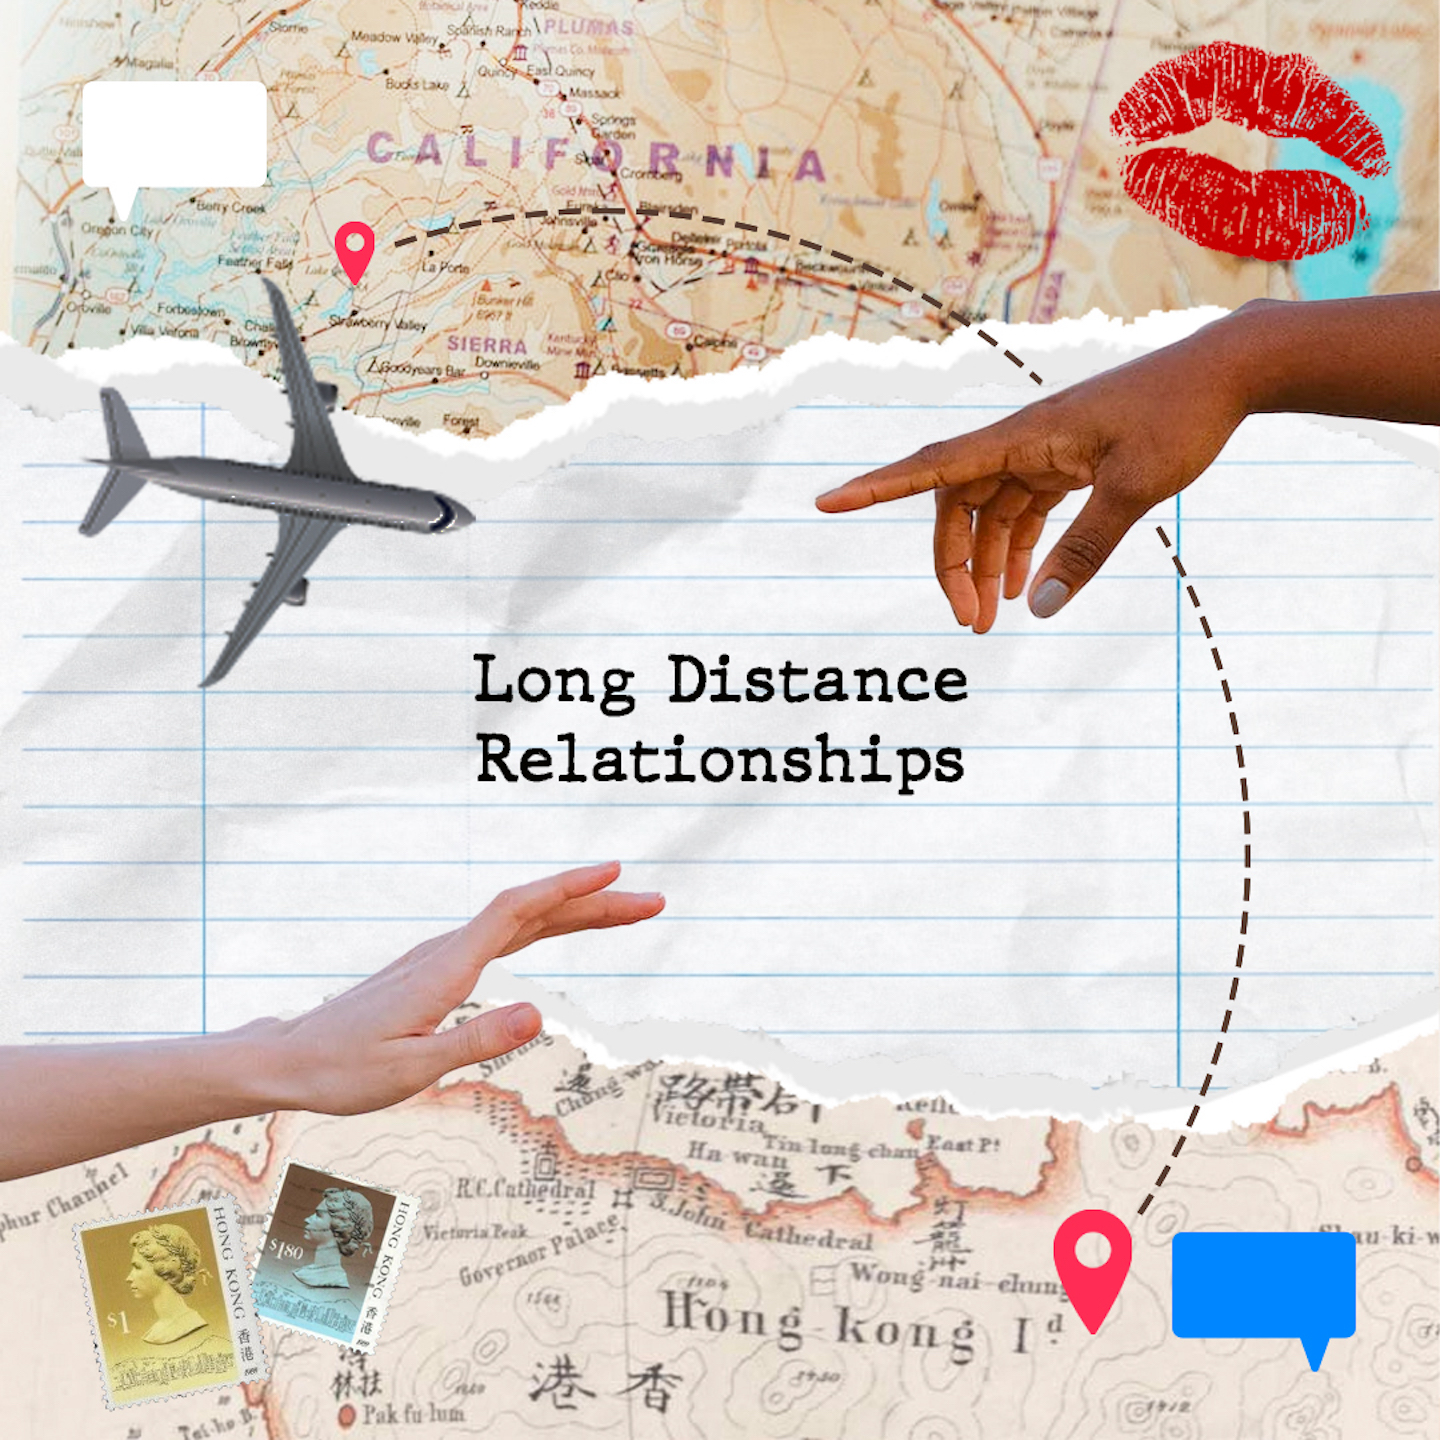 Hong Kong Dating Stories: Long Distance Relationships